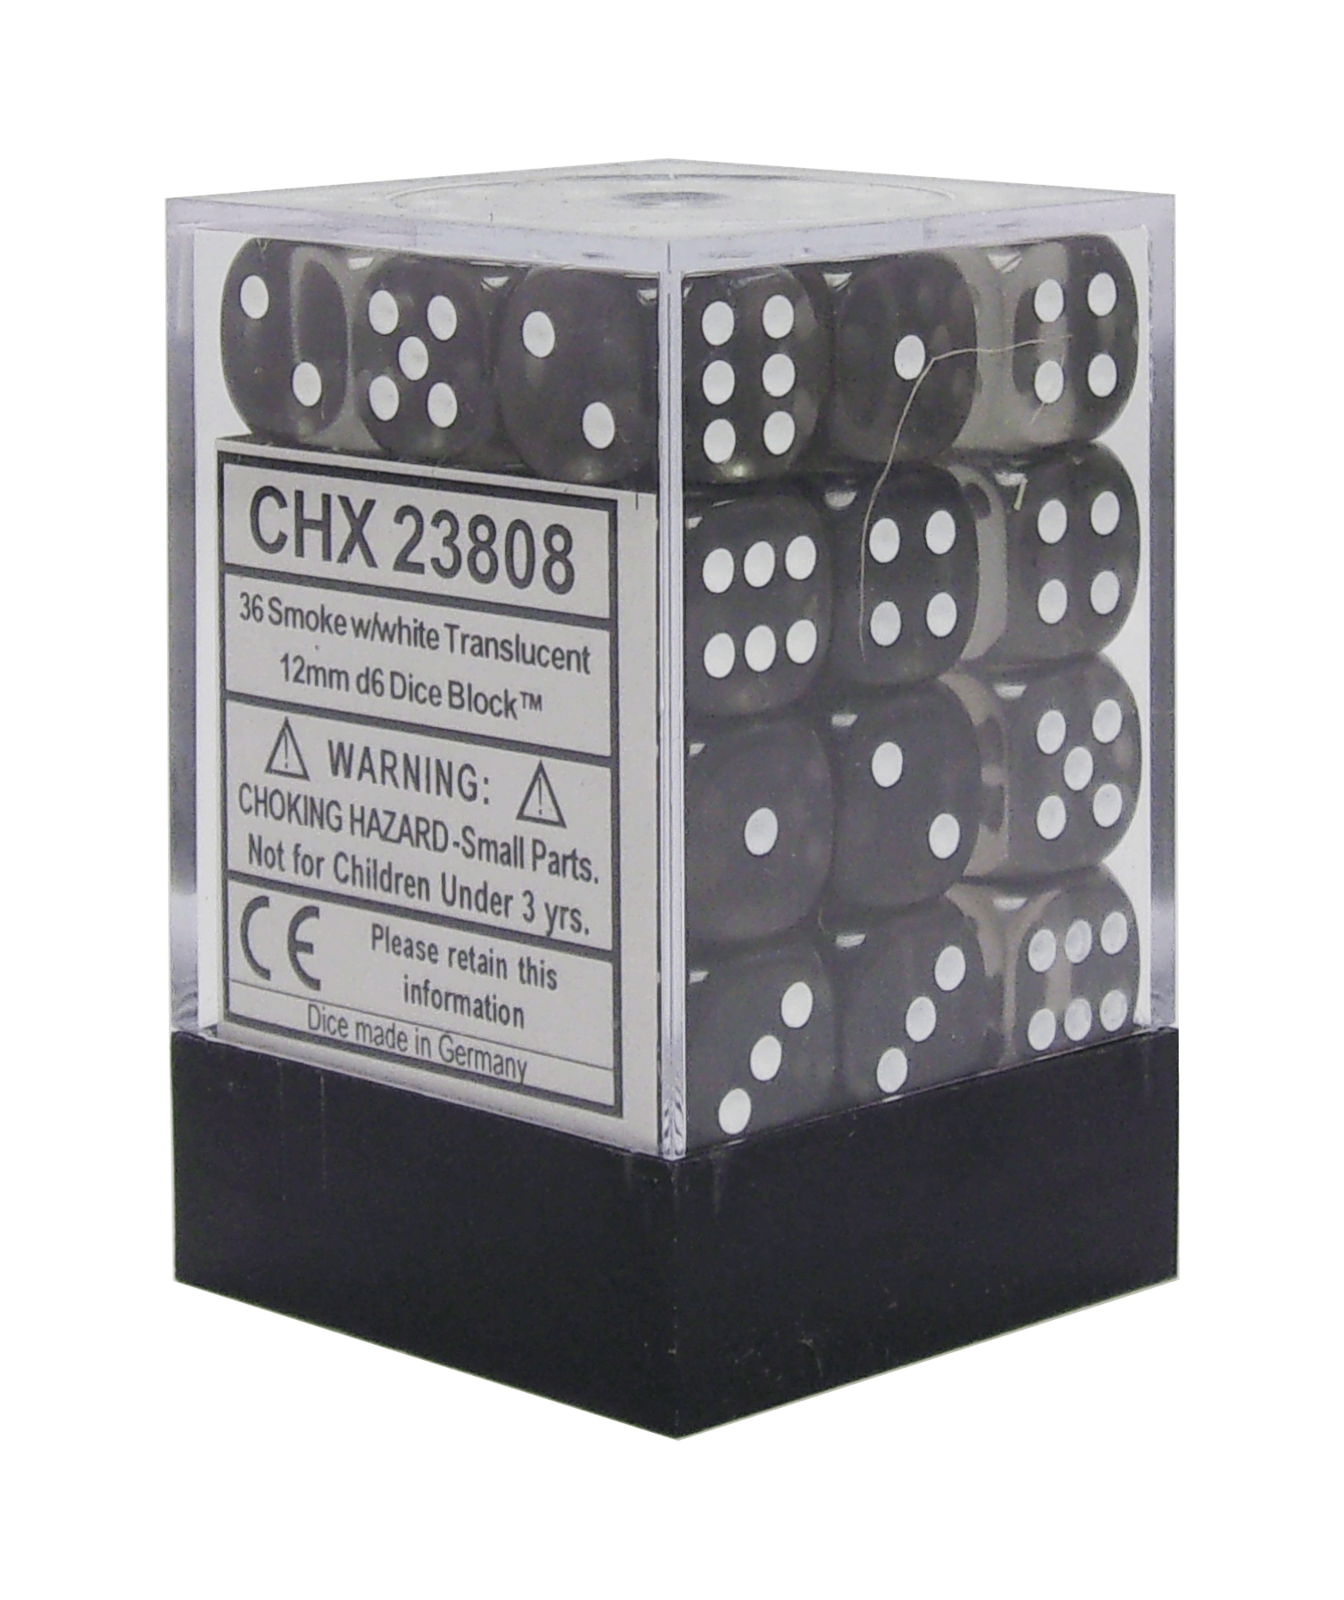 CHESSEX 23808 Translucent 12mm d6 Smoke/white Dice Blockâ„¢ 36 dice